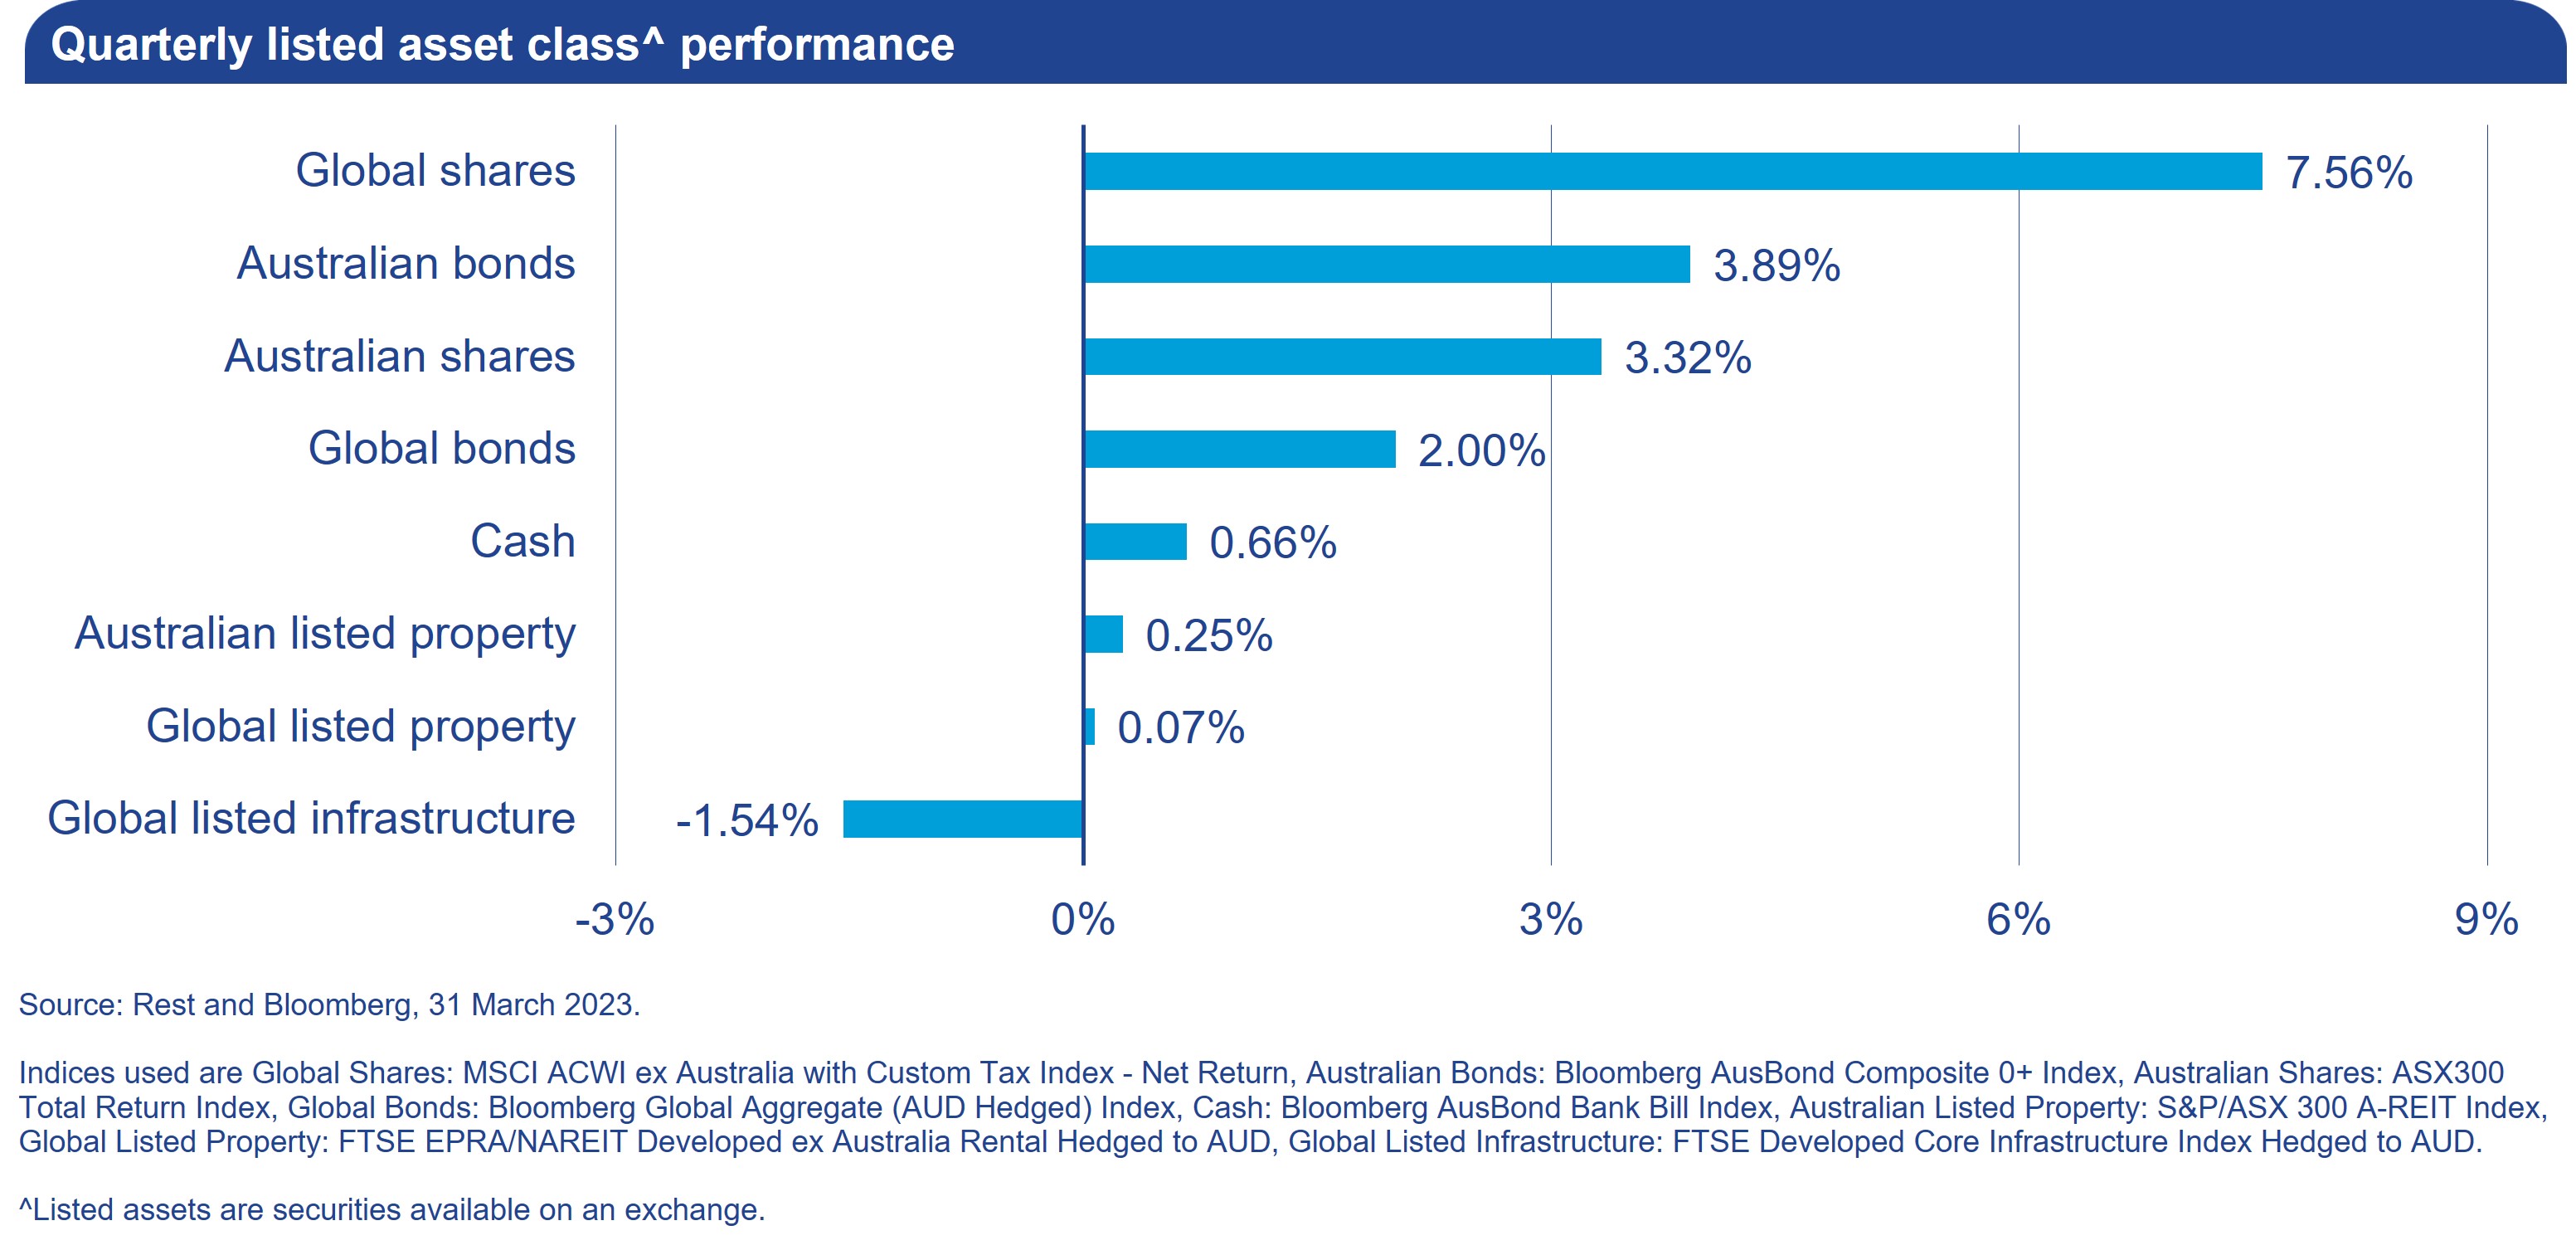 Quarterly listed asset class performance